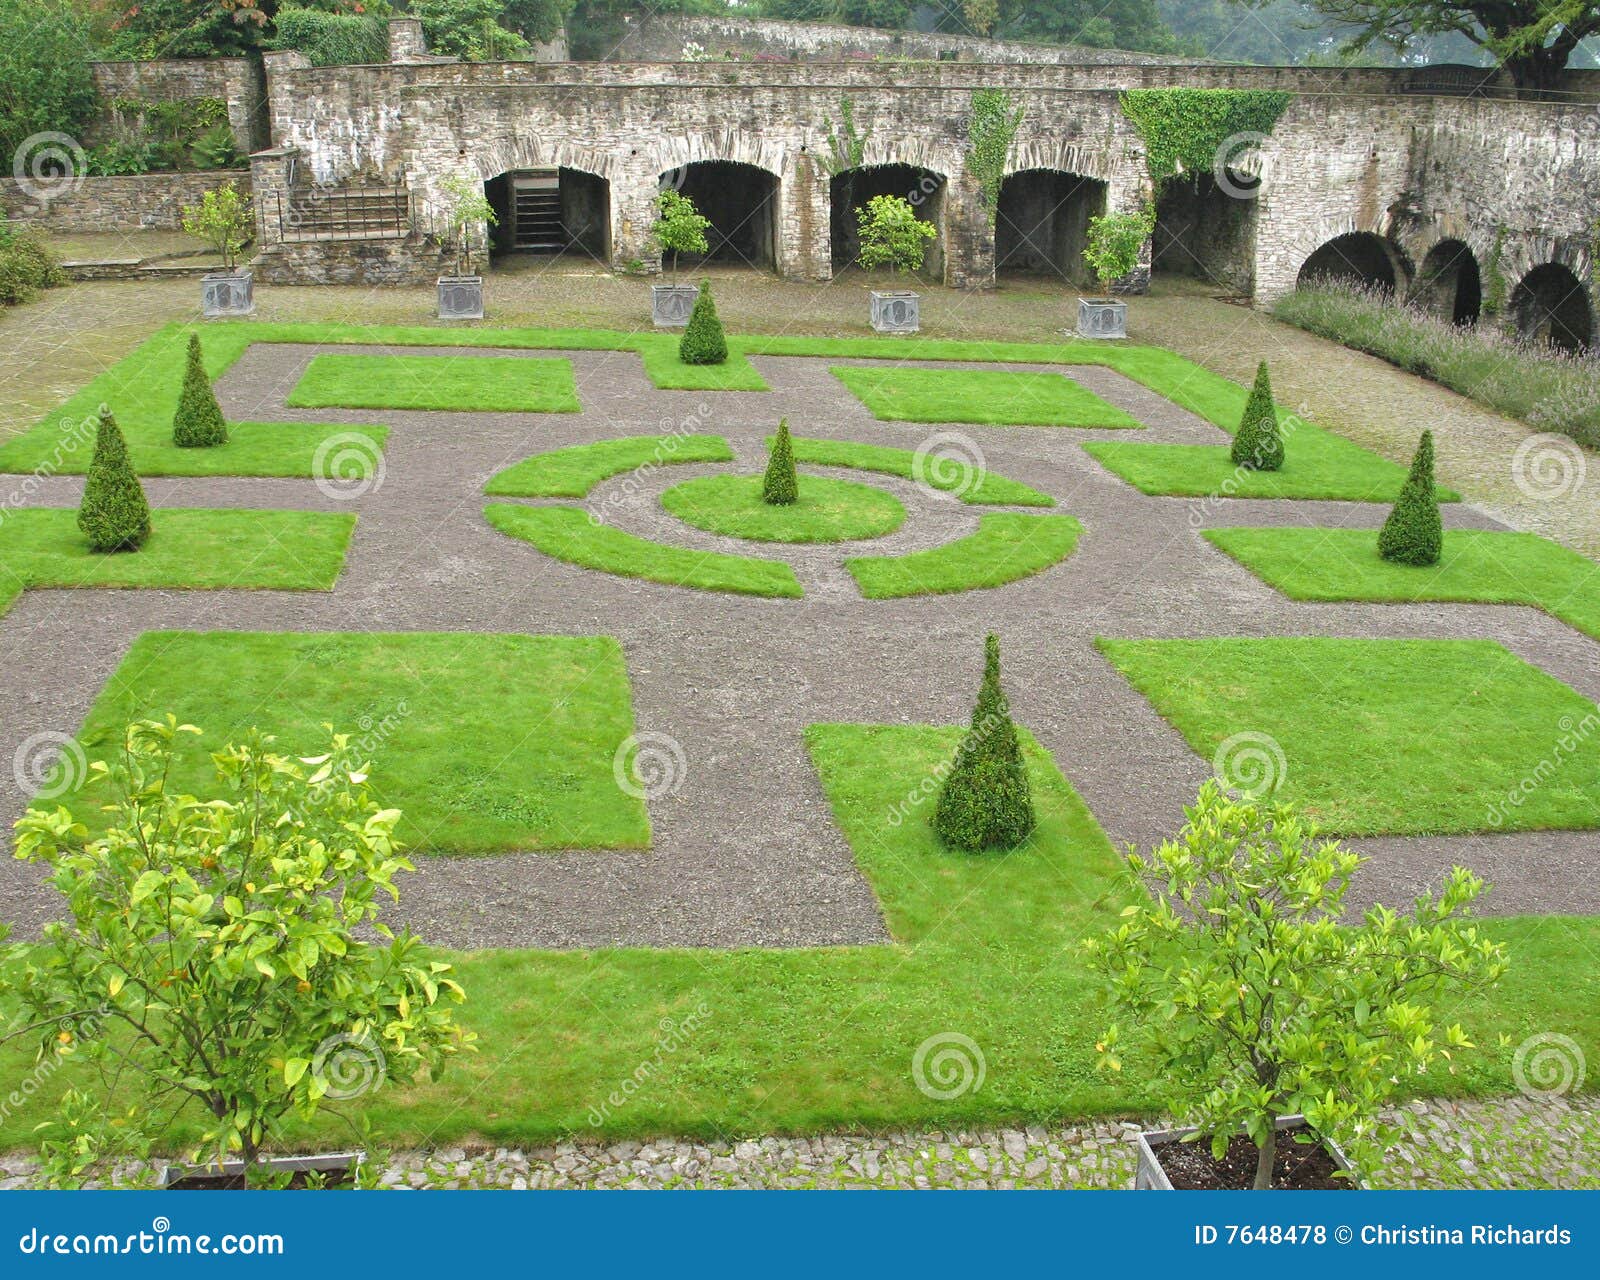 cloister garden at aberglasney, wales uk